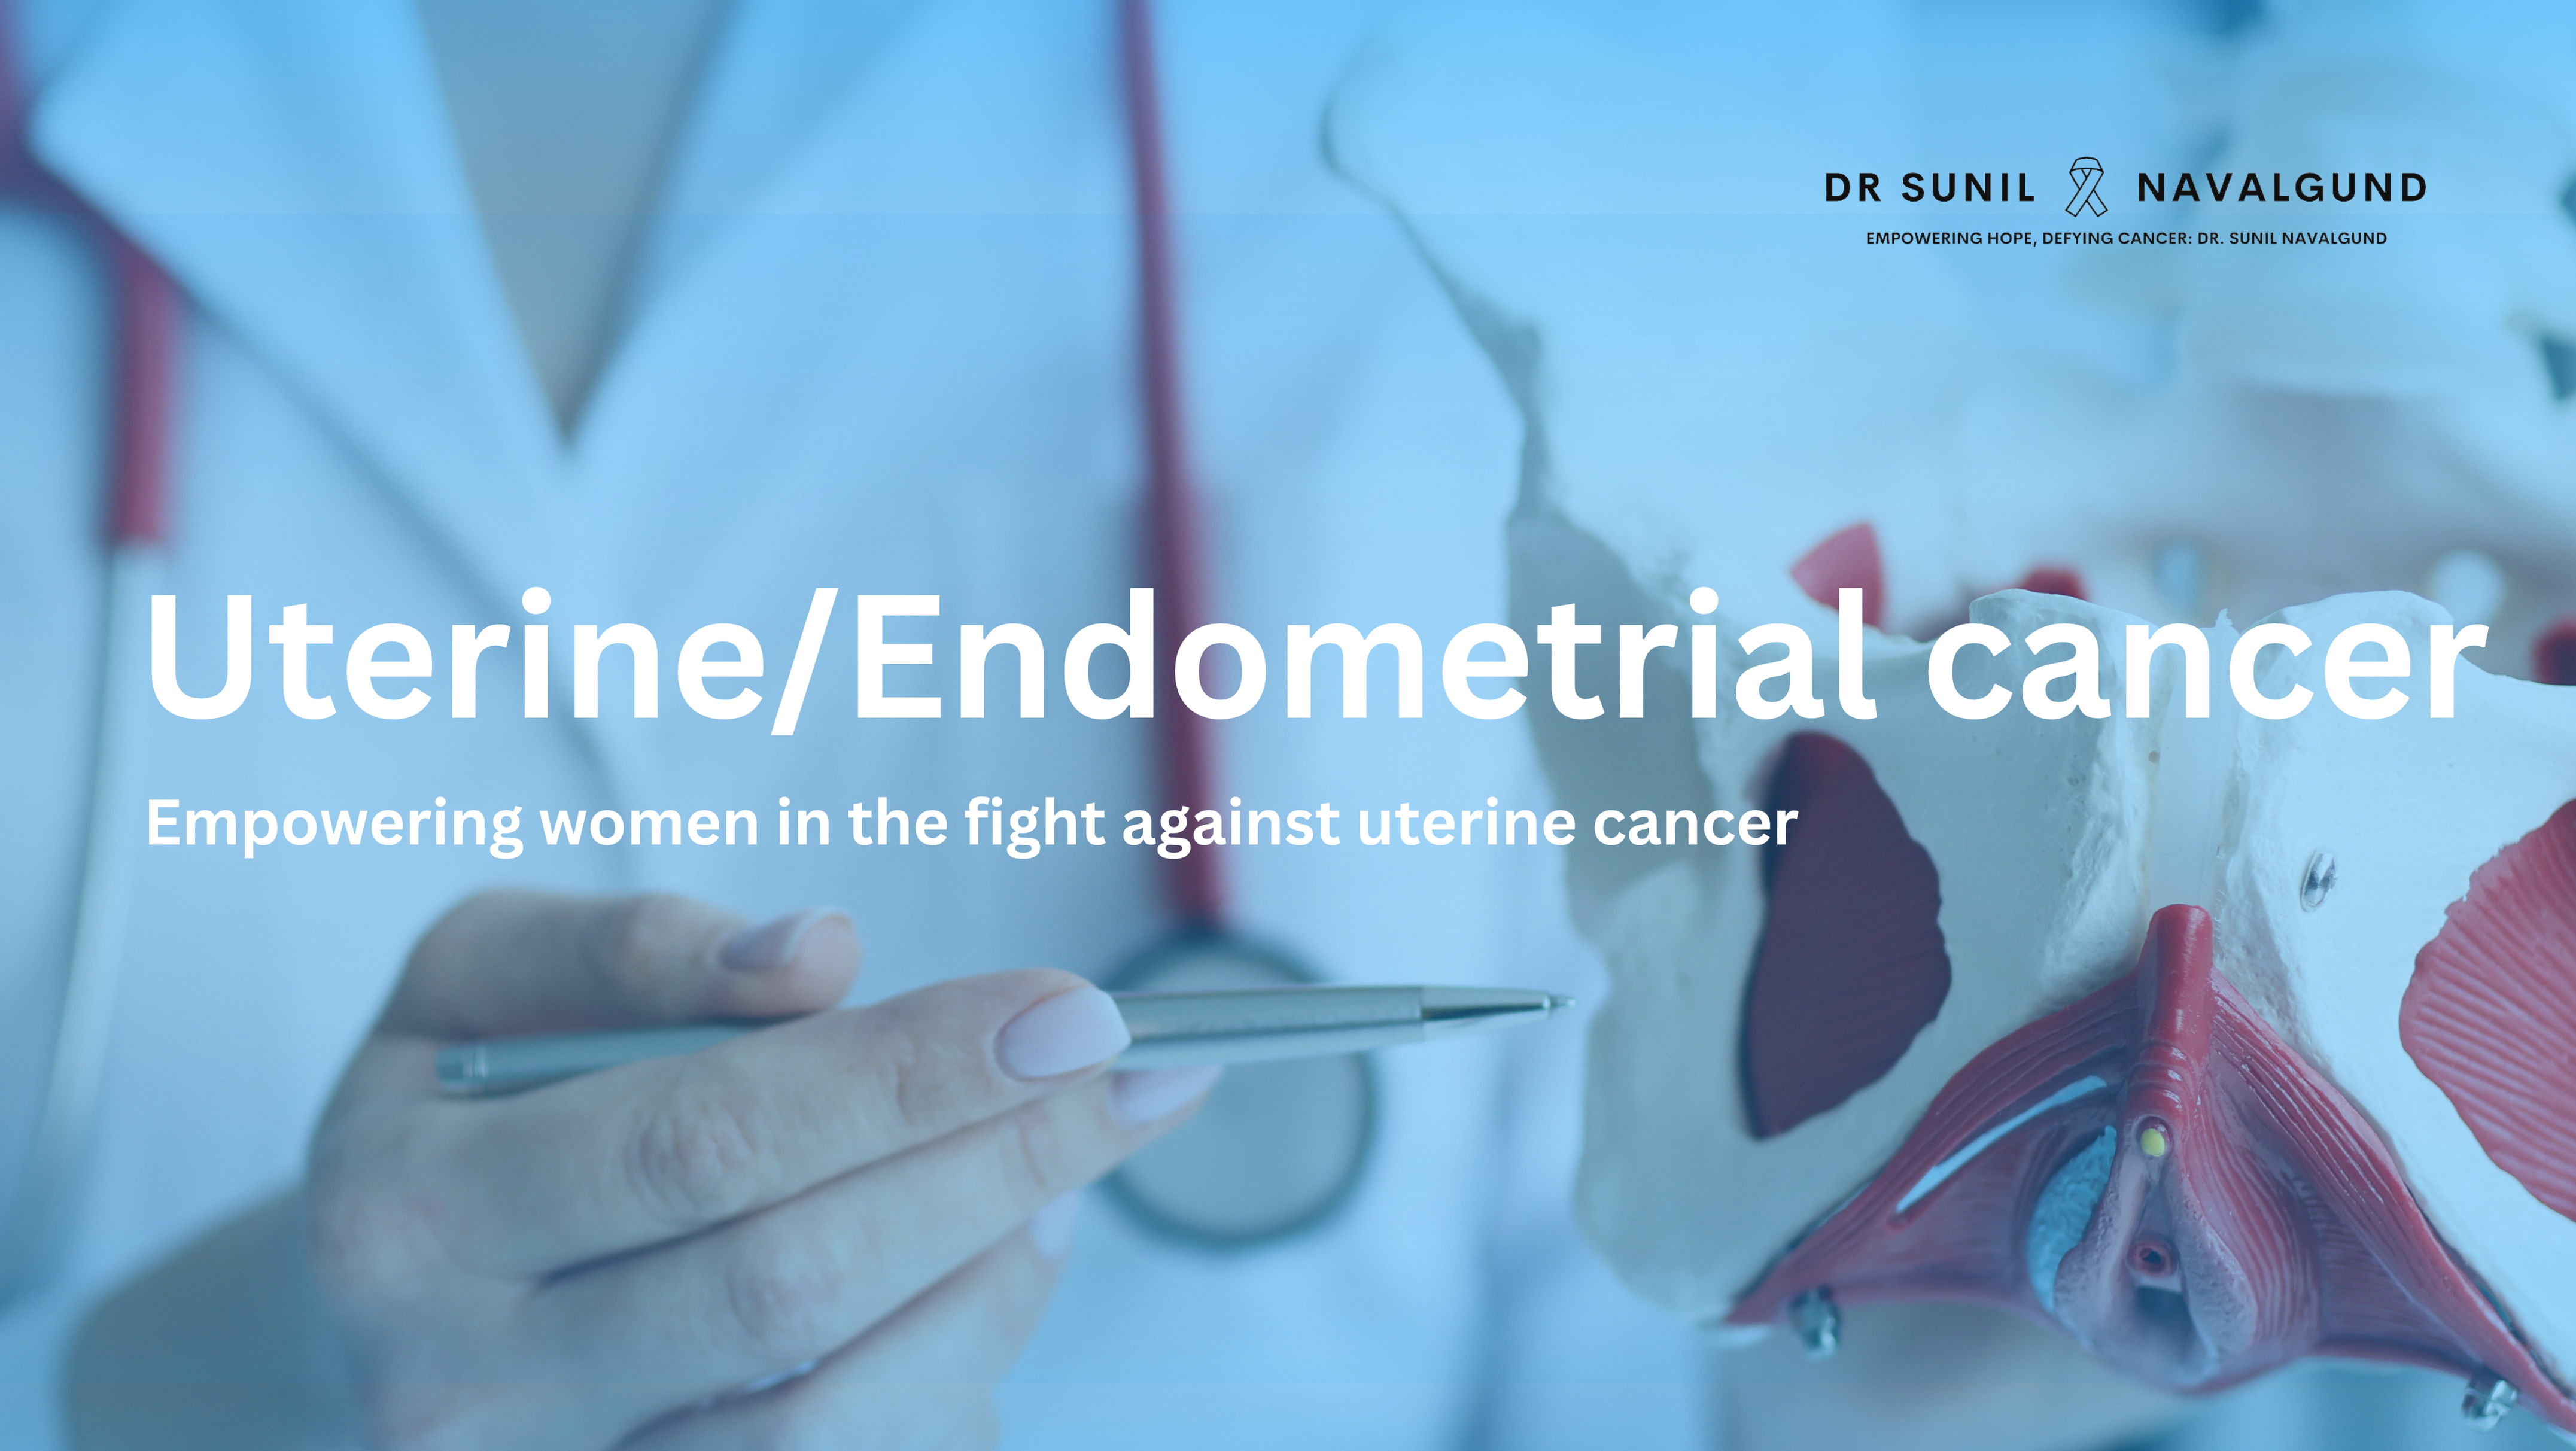 Uterine/endometrial cancer